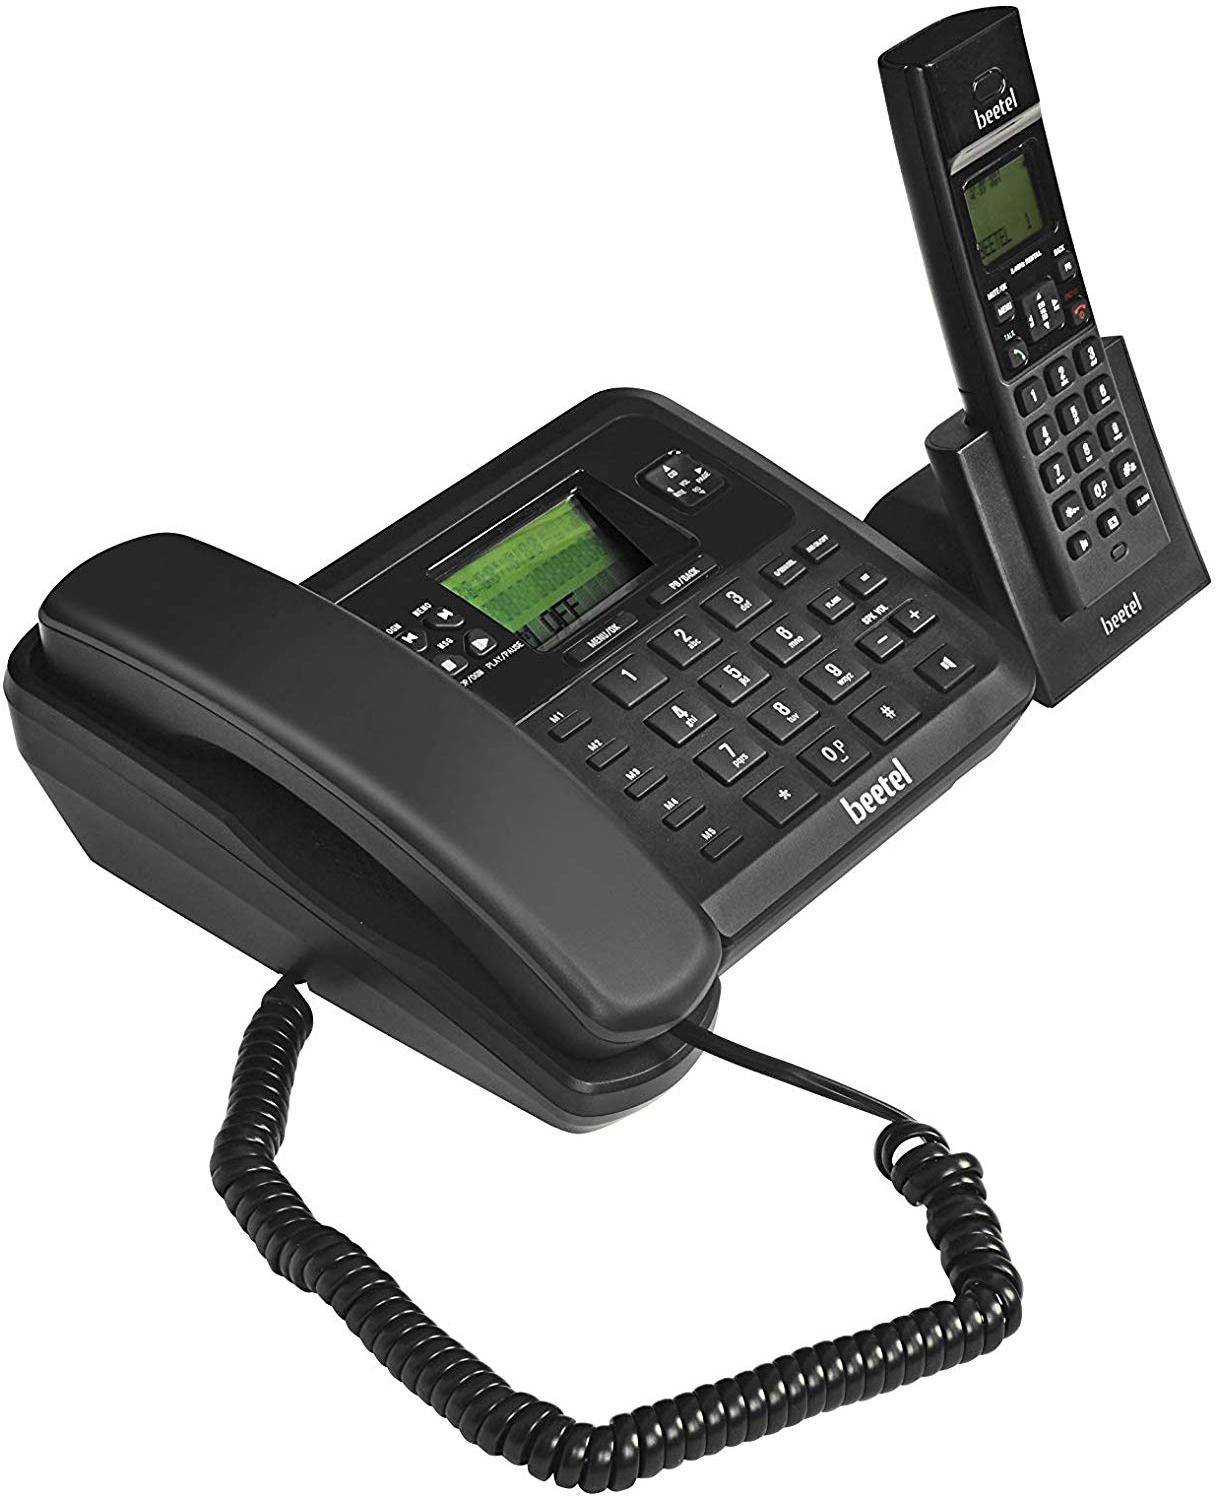 Beetel X78 Wireless and Wired Combo Landline Phone zoom image